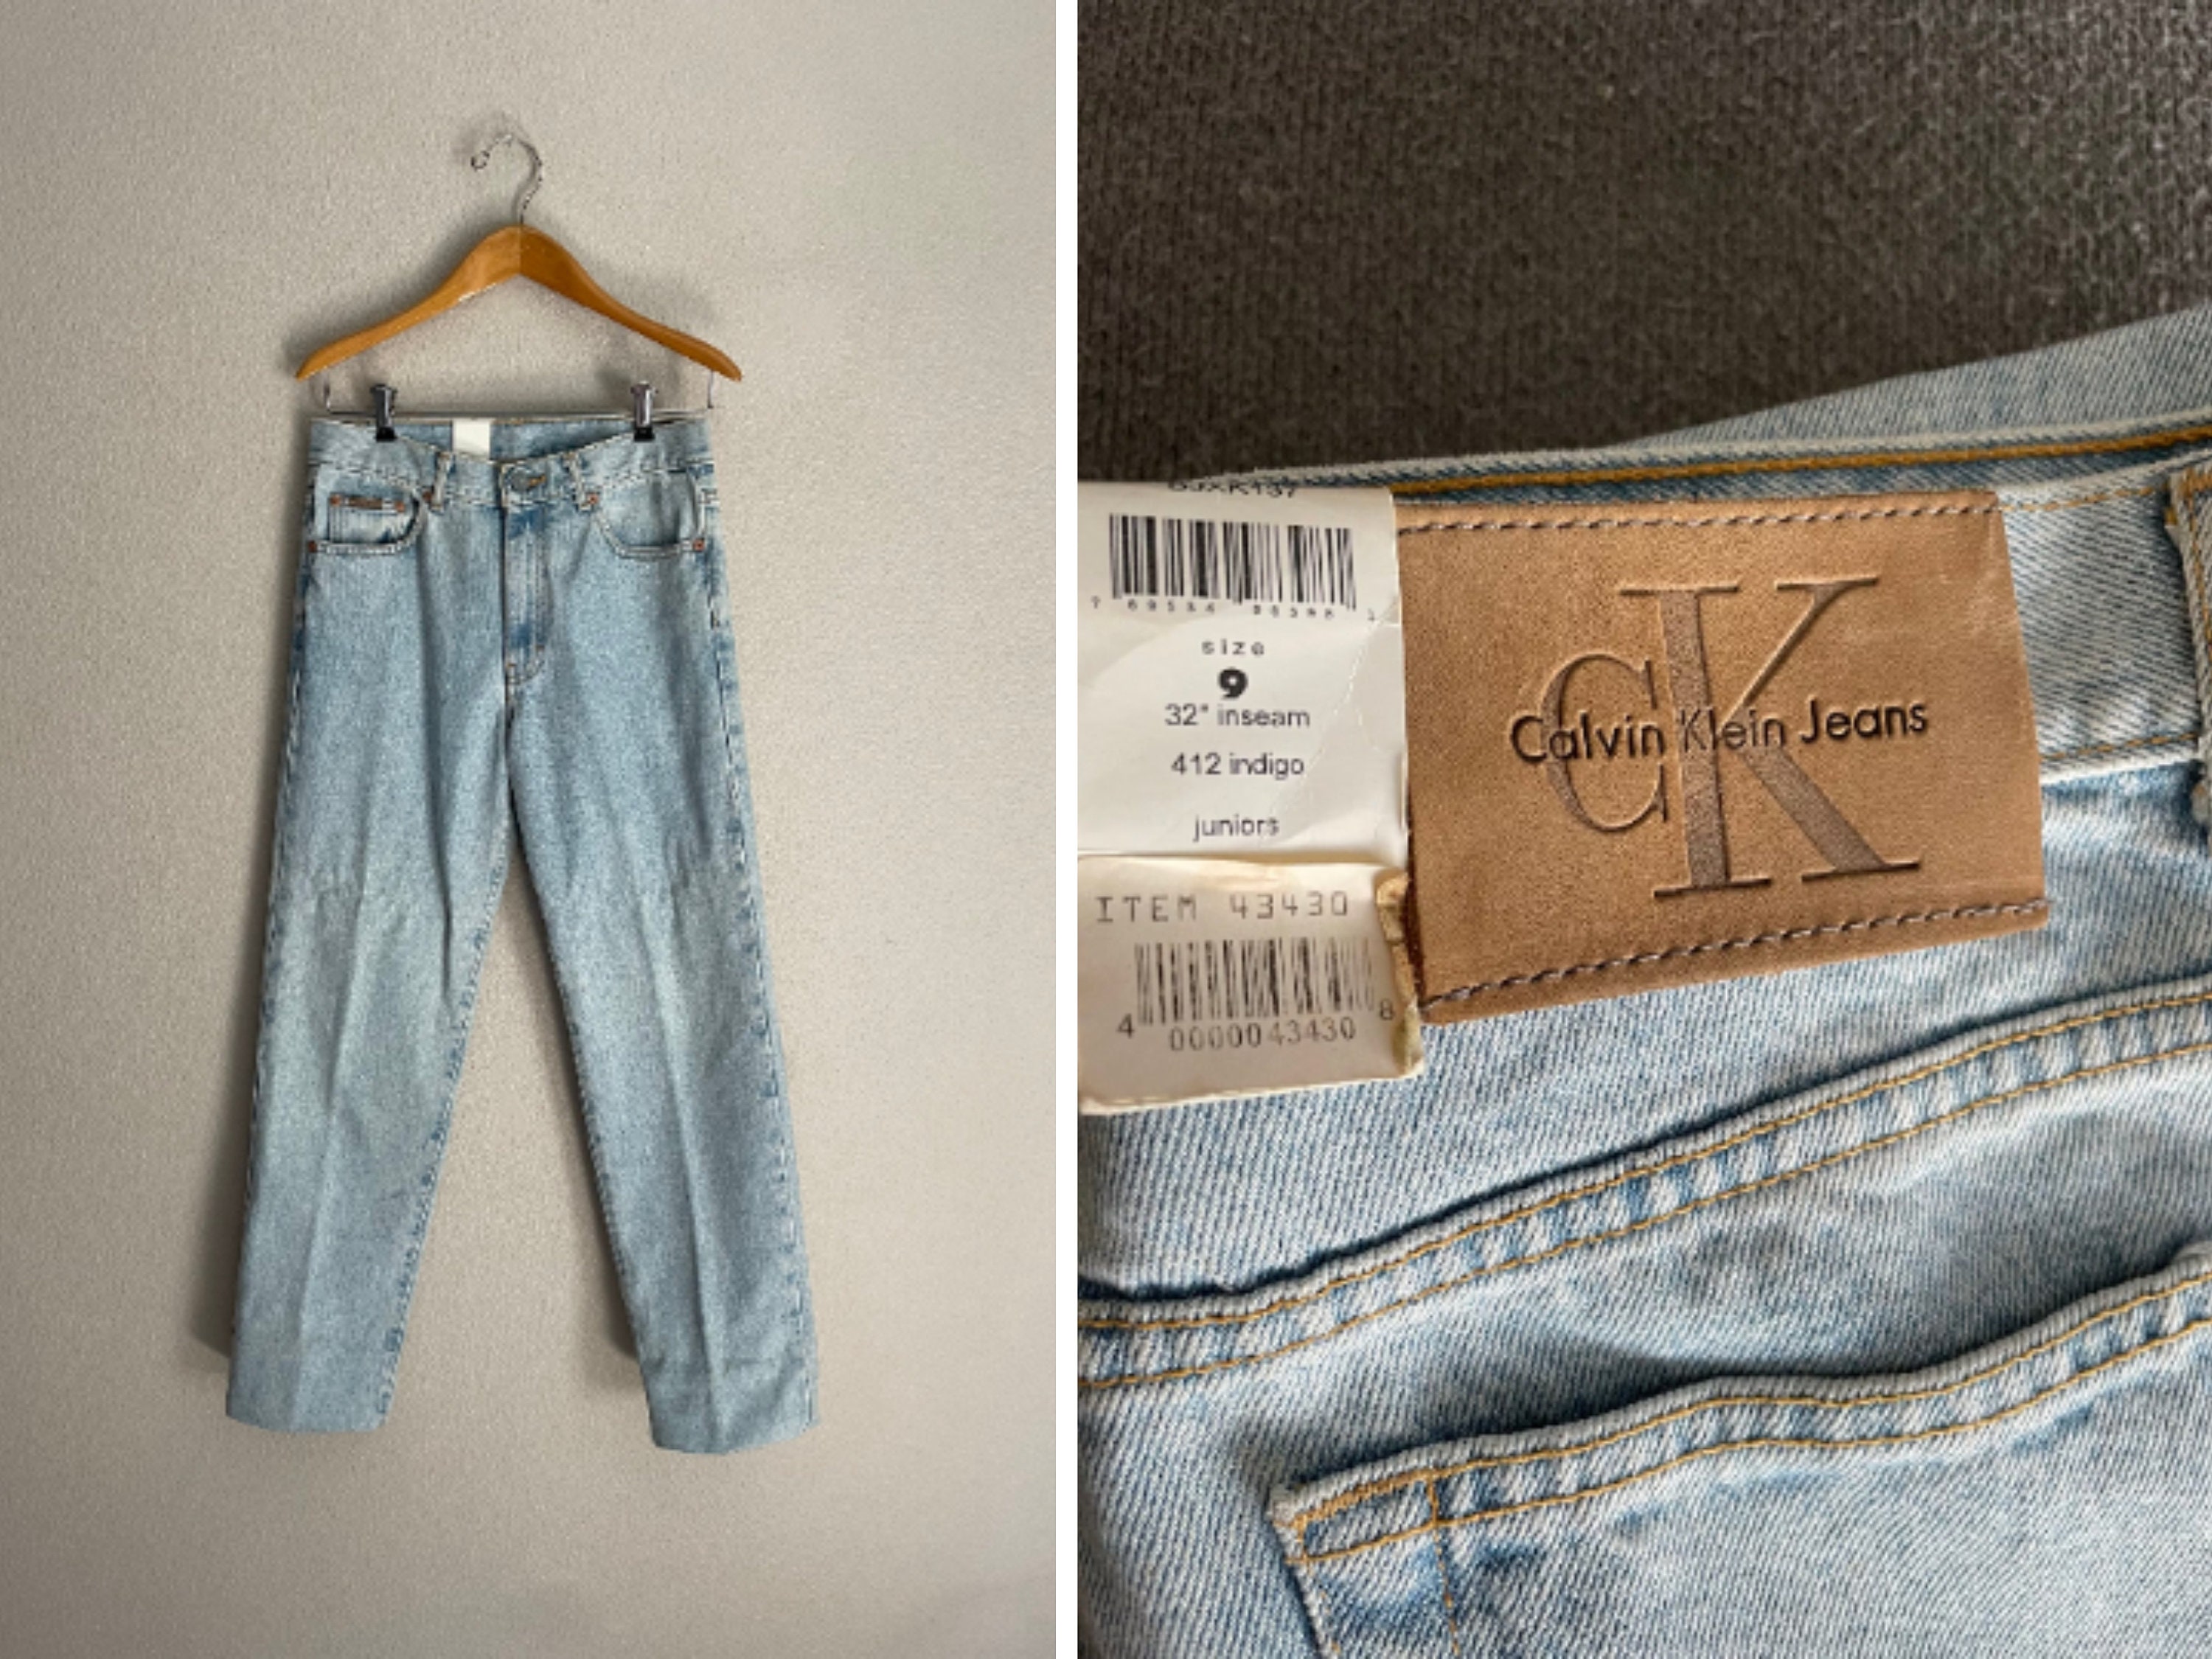 90s Ck Jeans 